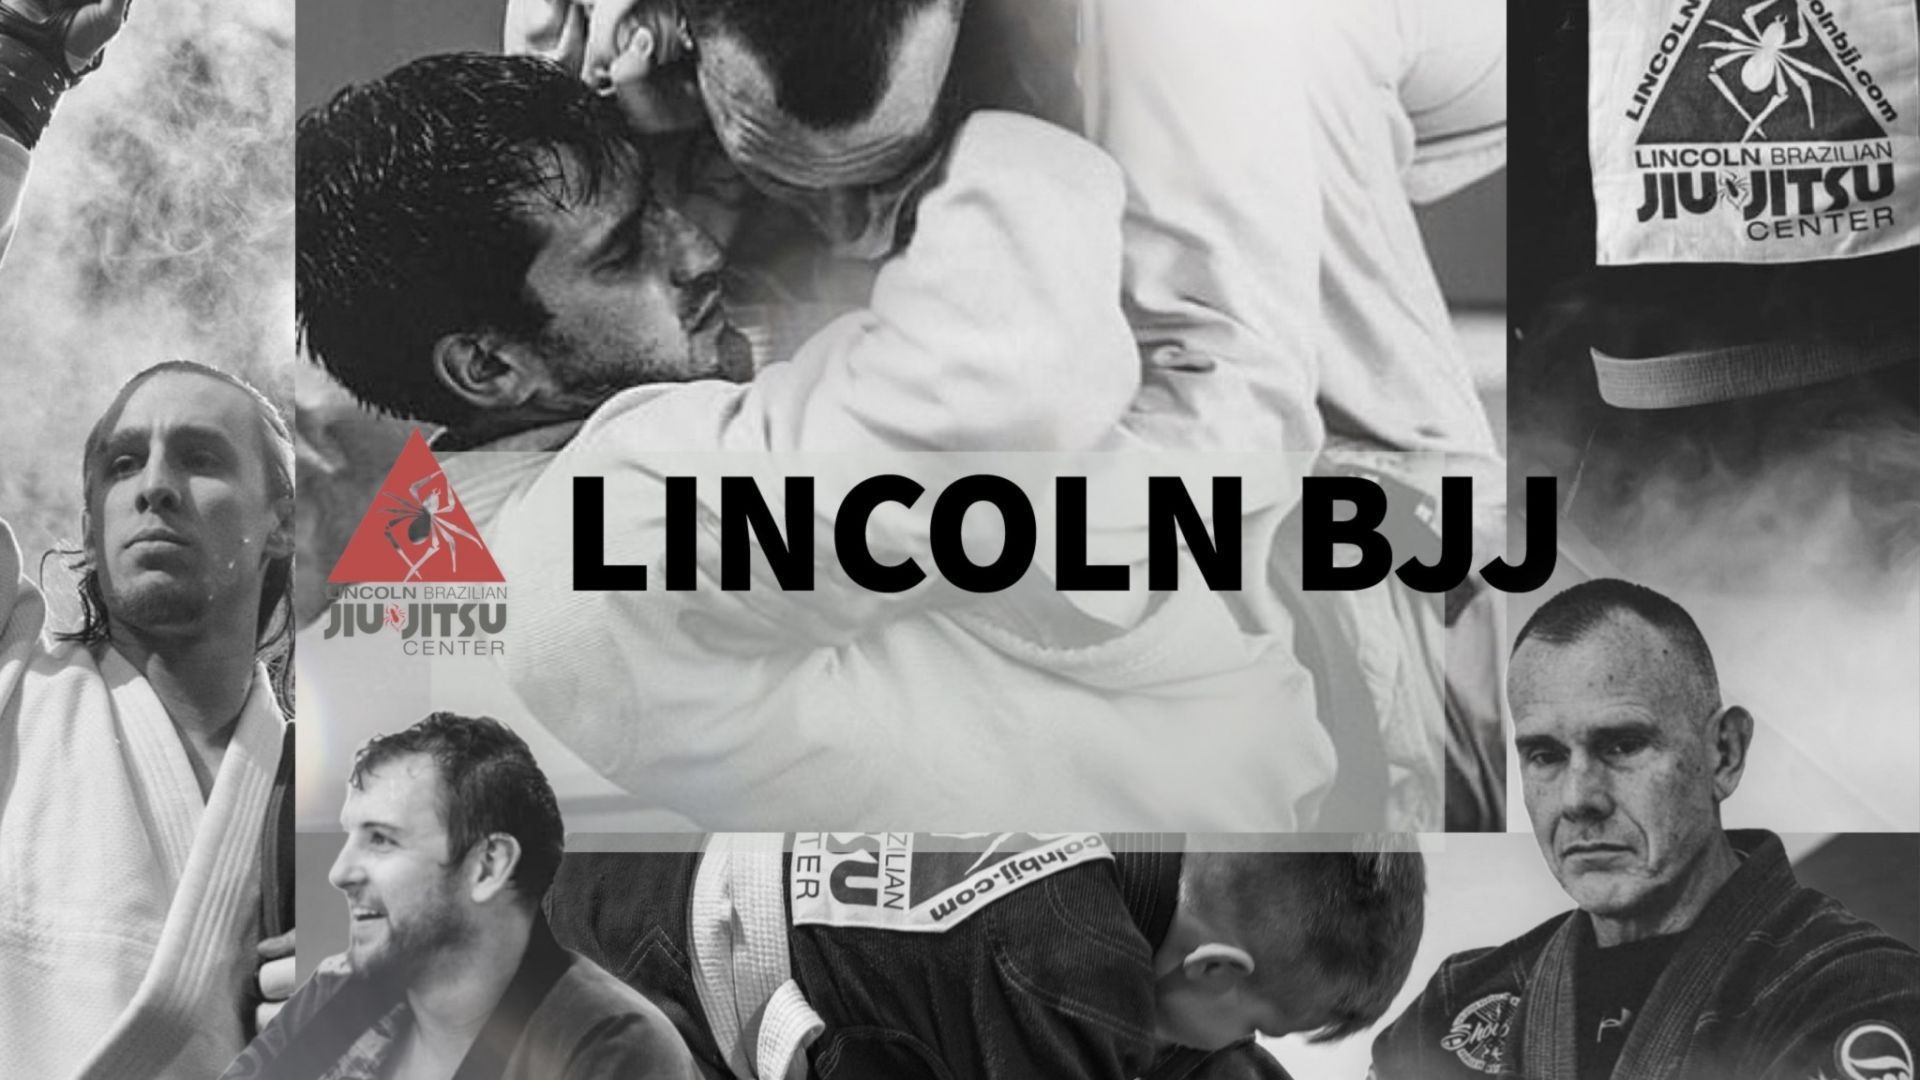 Lincoln Brazilian Jiu-Jitsu Center - Havelock photo